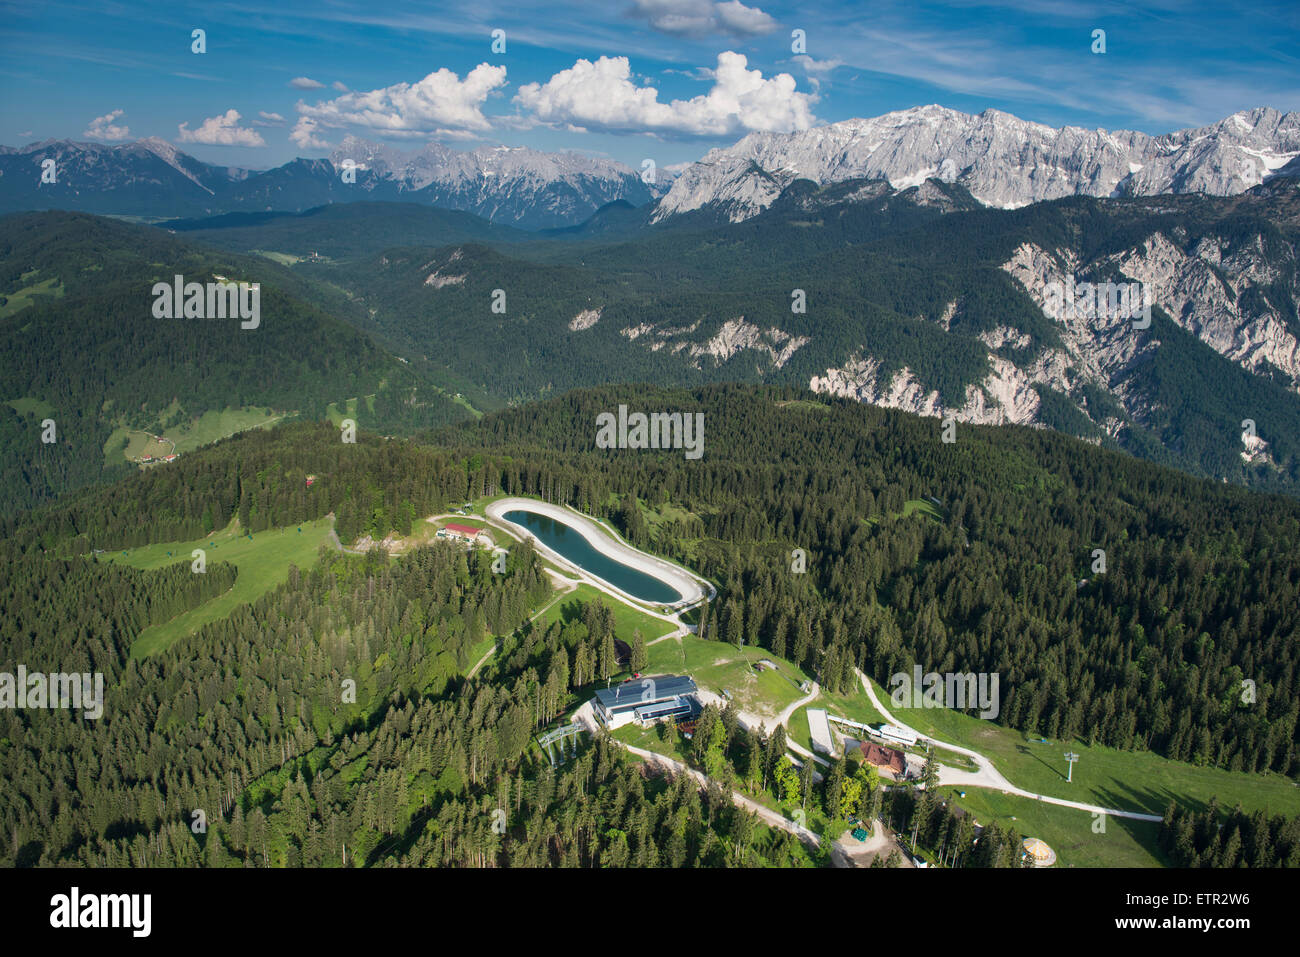 Hausberg, Hausberbahn, top terminal, aerial shot, Germany, Bavaria, Upper Bavaria, Bavarian Alps, Werdenfelser Land, mountains, Stock Photo